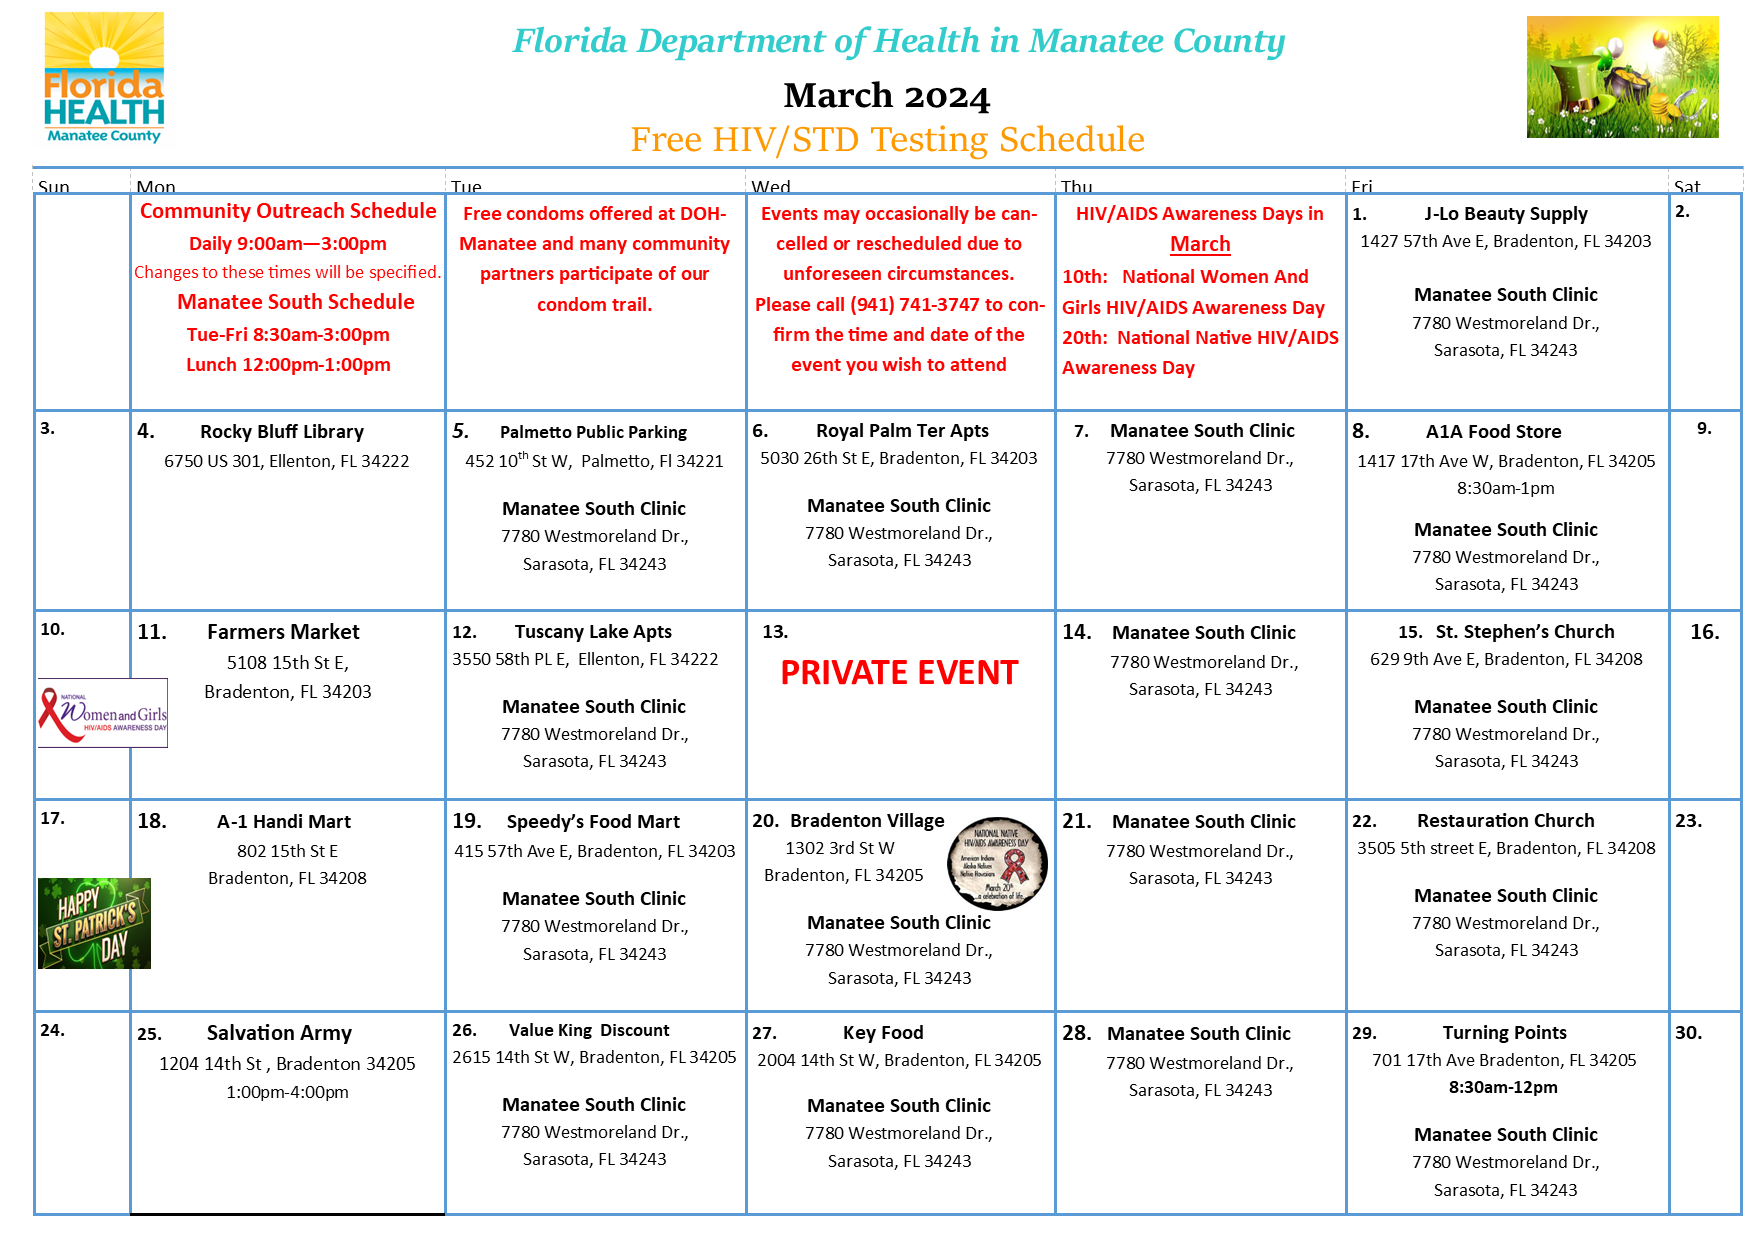 HIV/STD March Testing Schedule Calendar Florida Department of Health